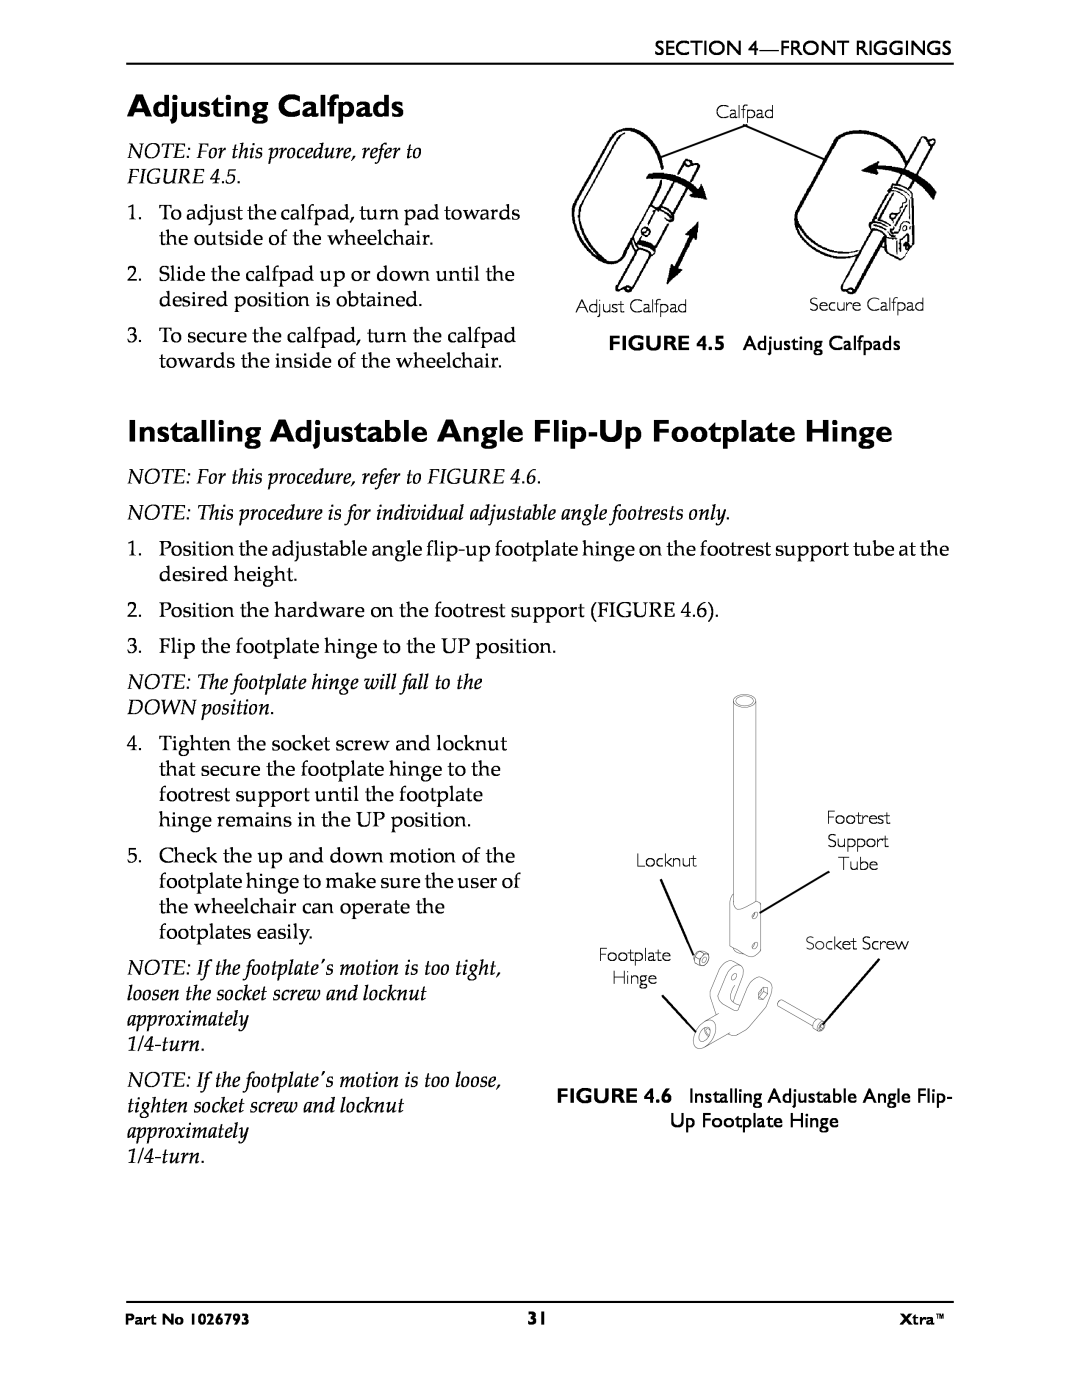 Invacare 1026793 manual Adjusting Calfpads, Installing Adjustable Angle Flip-Up Footplate Hinge, 1/4-turn 